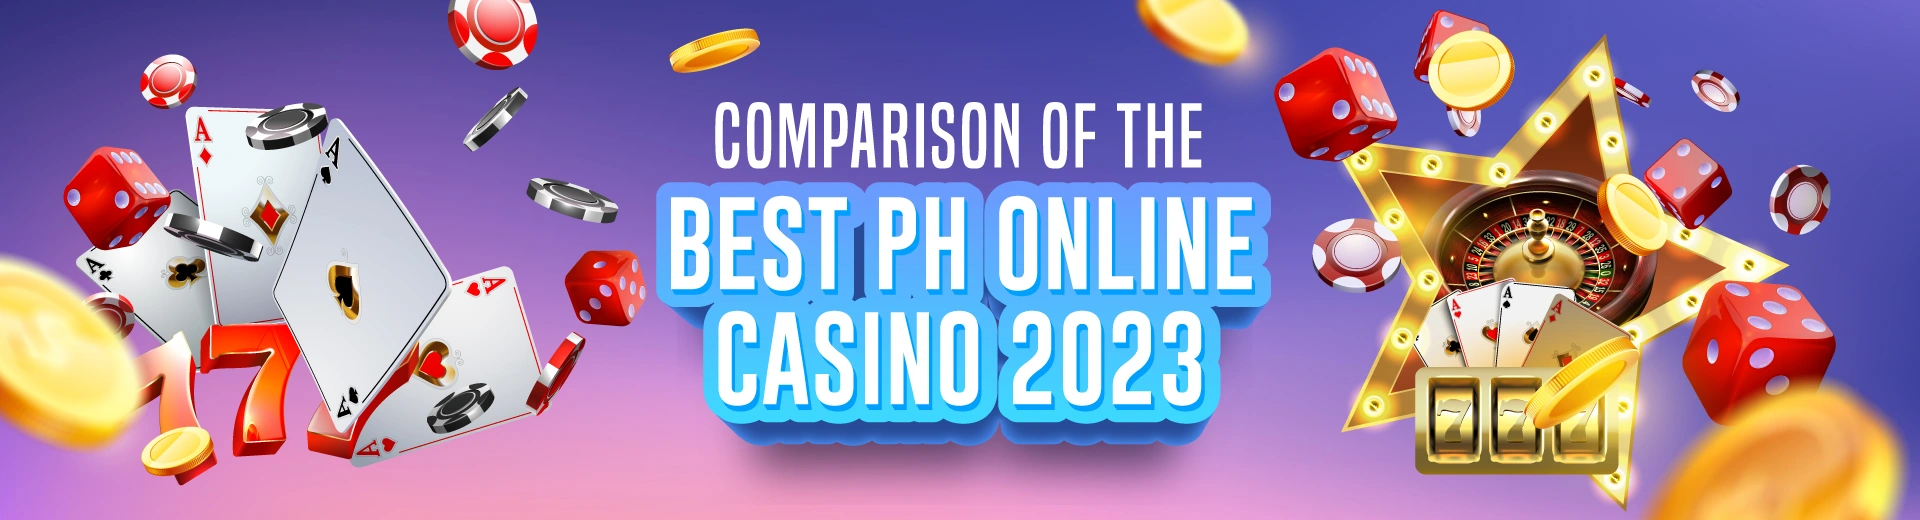 OKBet Comparison of the Best PH Online Casinos 2023